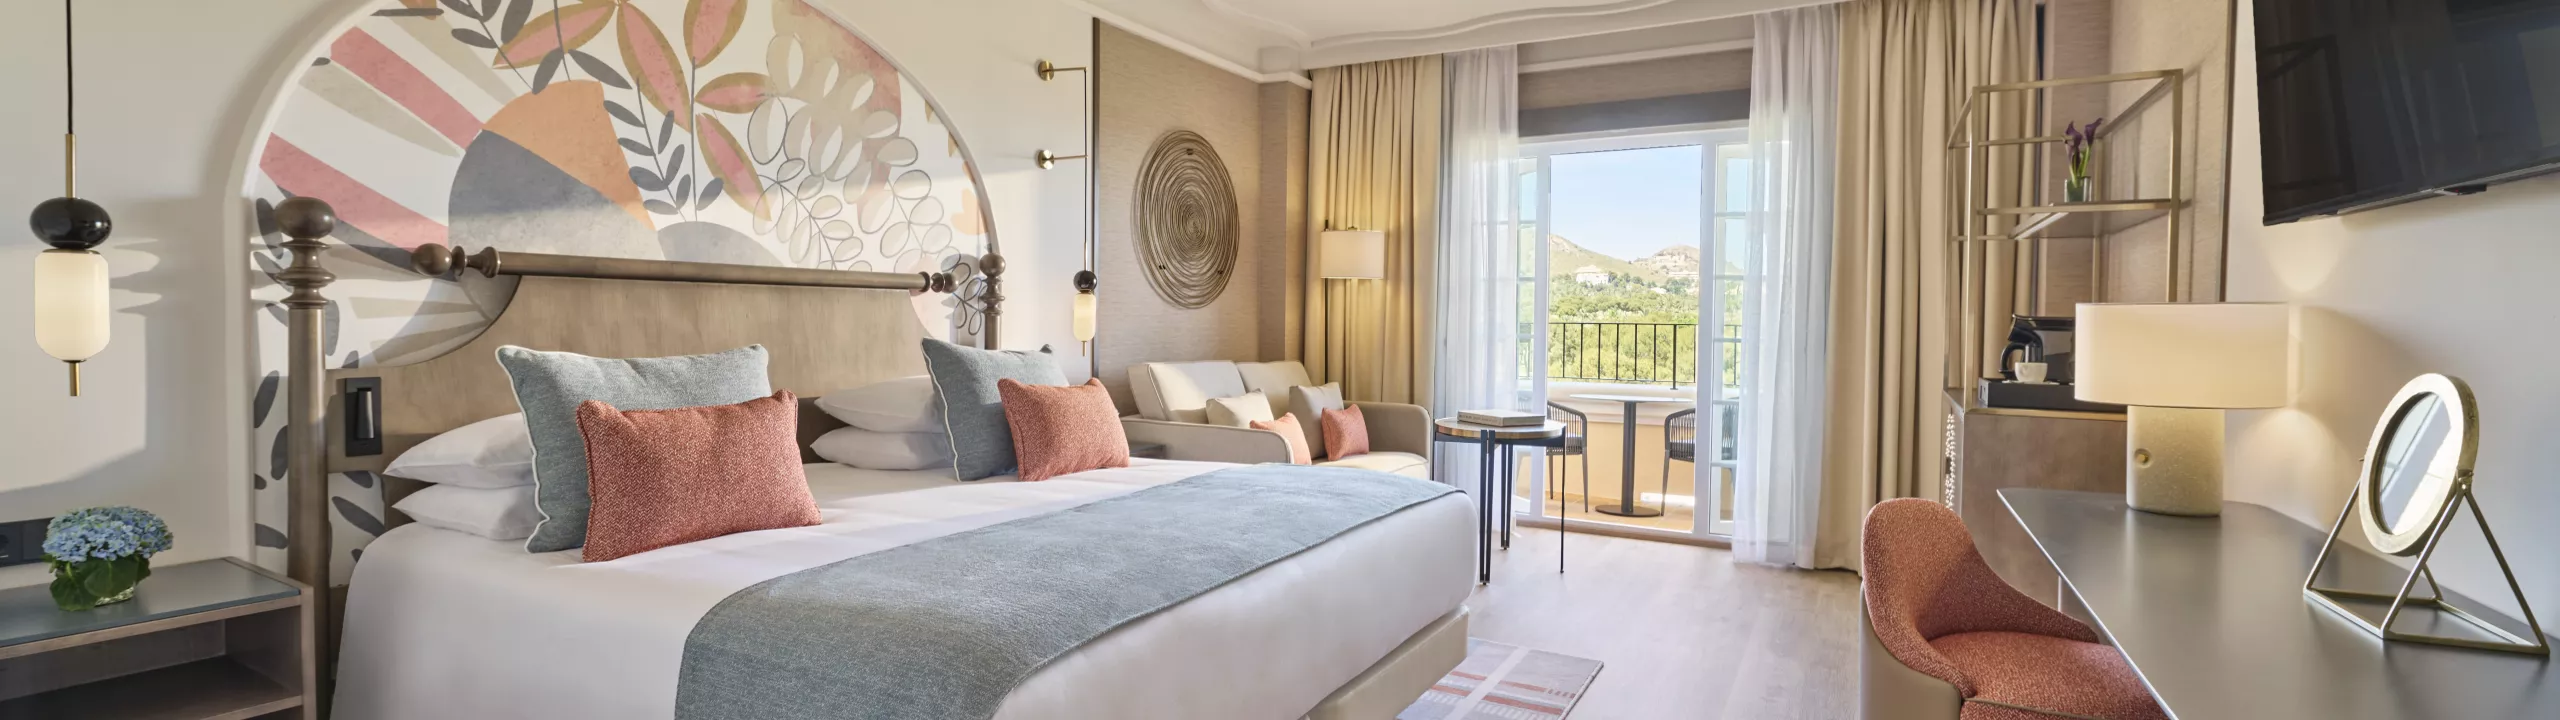 Estandar Room - Hotel Principe Felipe 